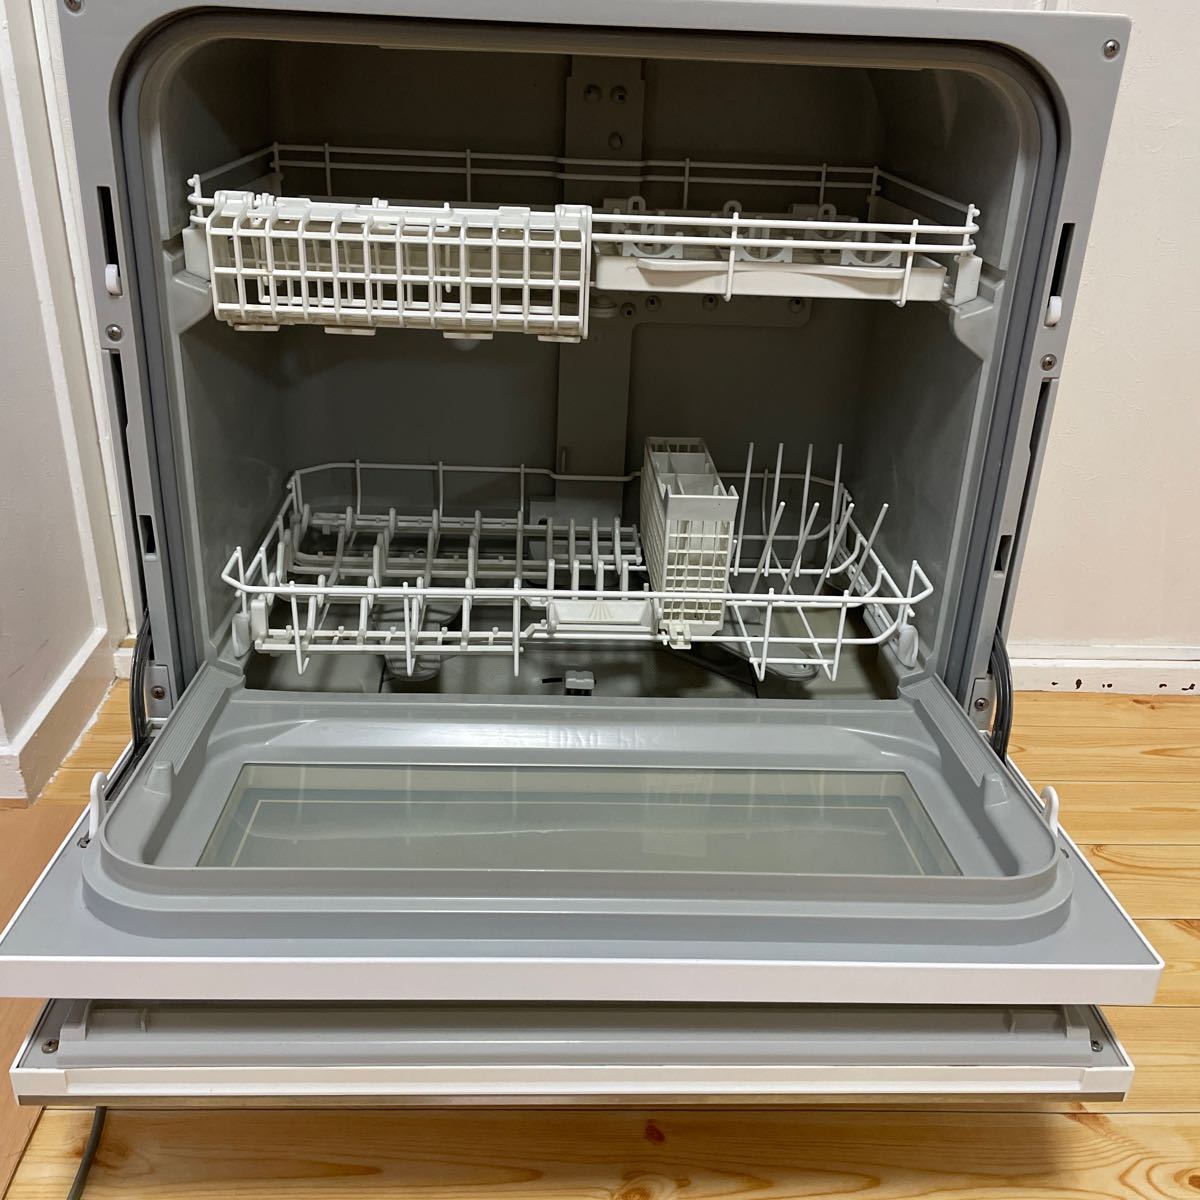 Panasonic NP-TZ100-W 2019年製 食器洗い乾燥機 パナソニック 家電 中古 食洗機 電気食器洗い乾燥機 _画像3